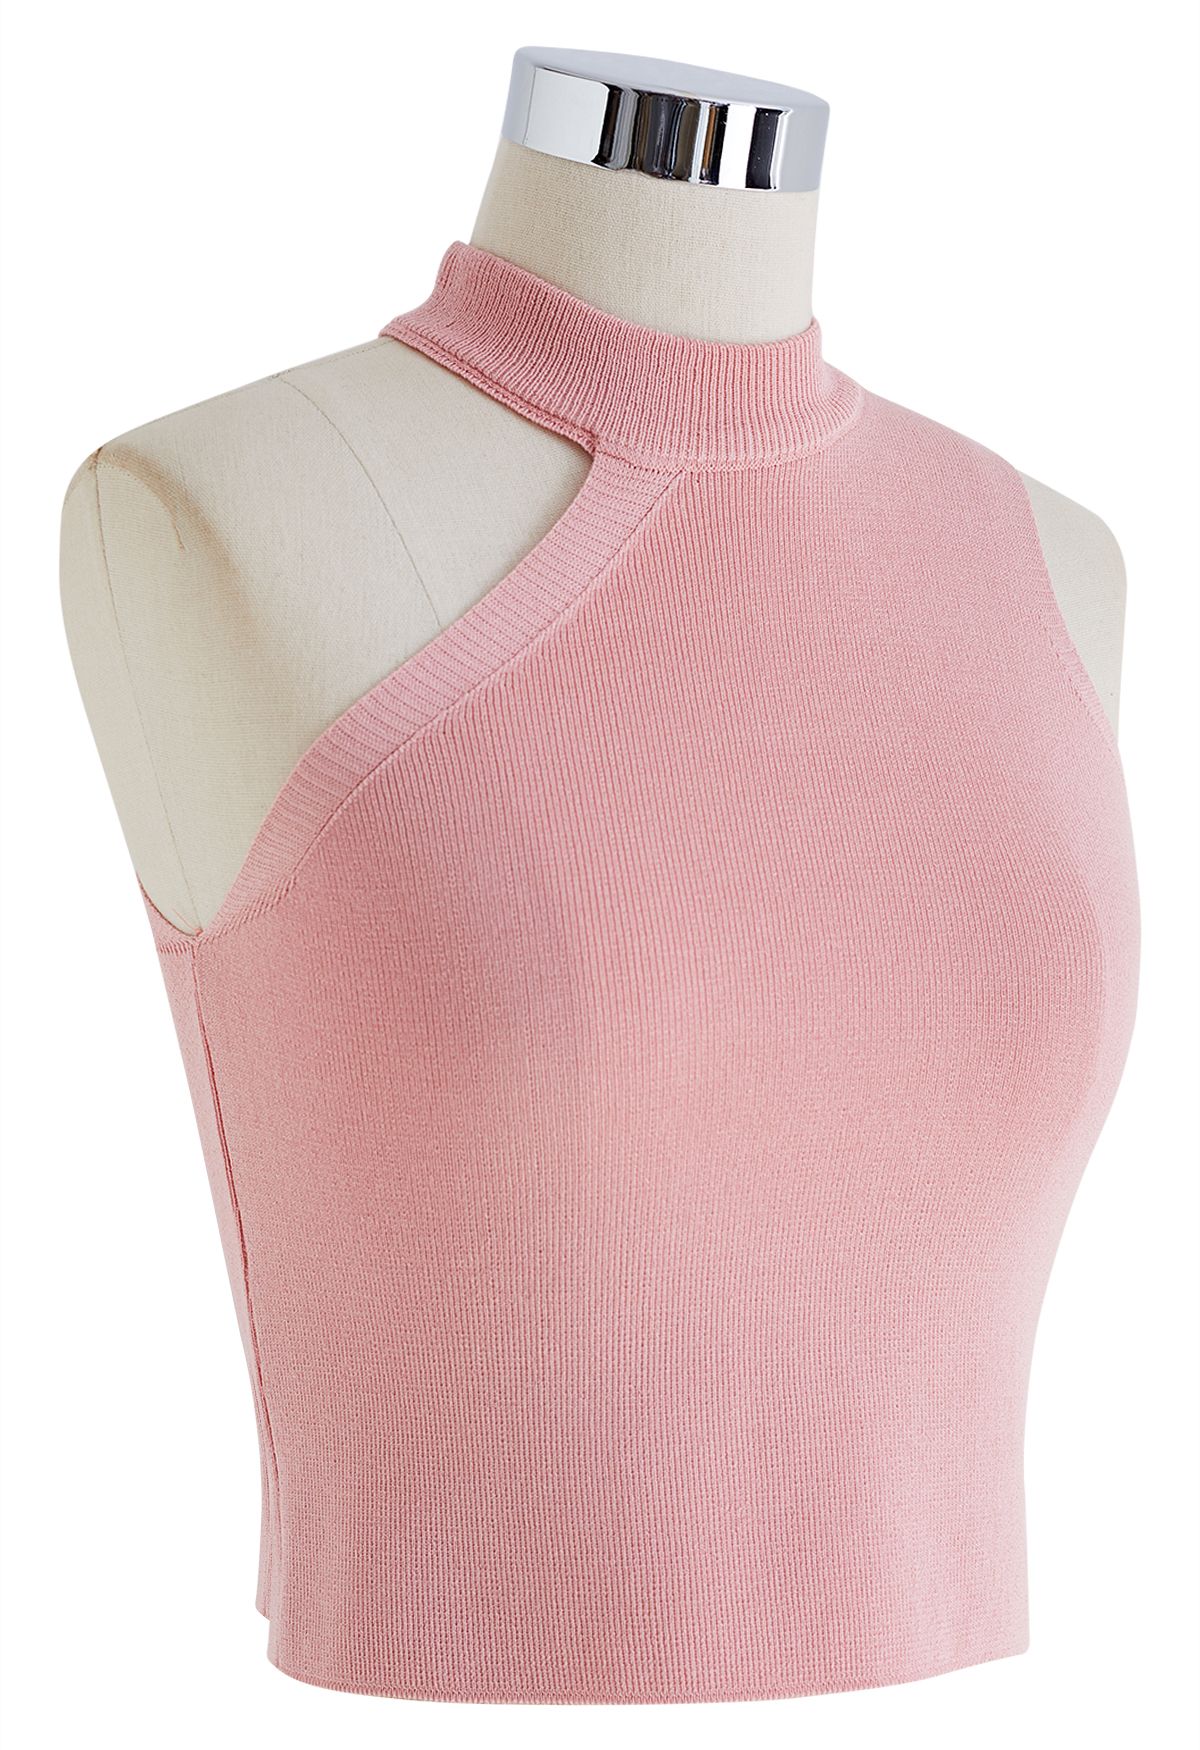 Asymmetric Halter Neck Knit Crop Top in Pink